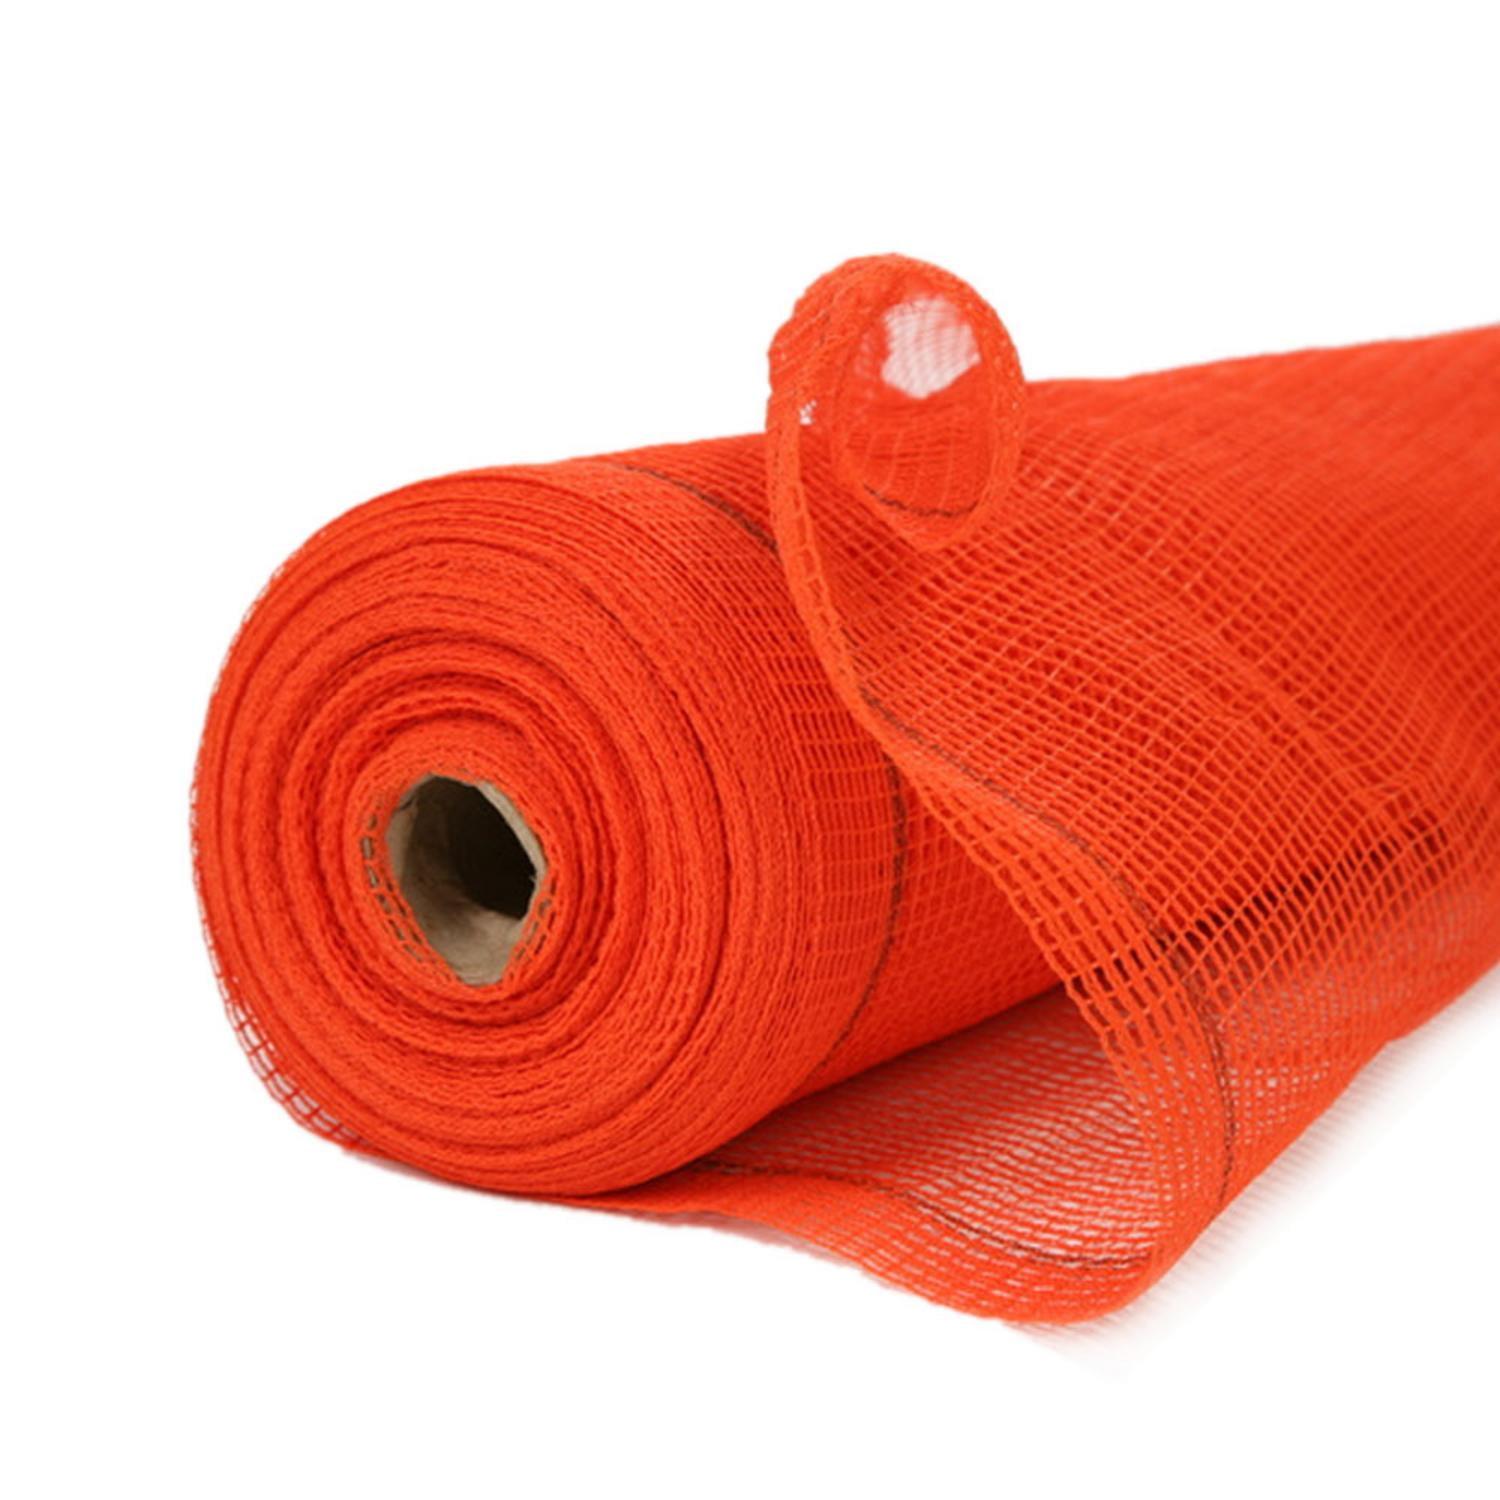 Boen Safety Netting; Debris Orange FR 4' x 150